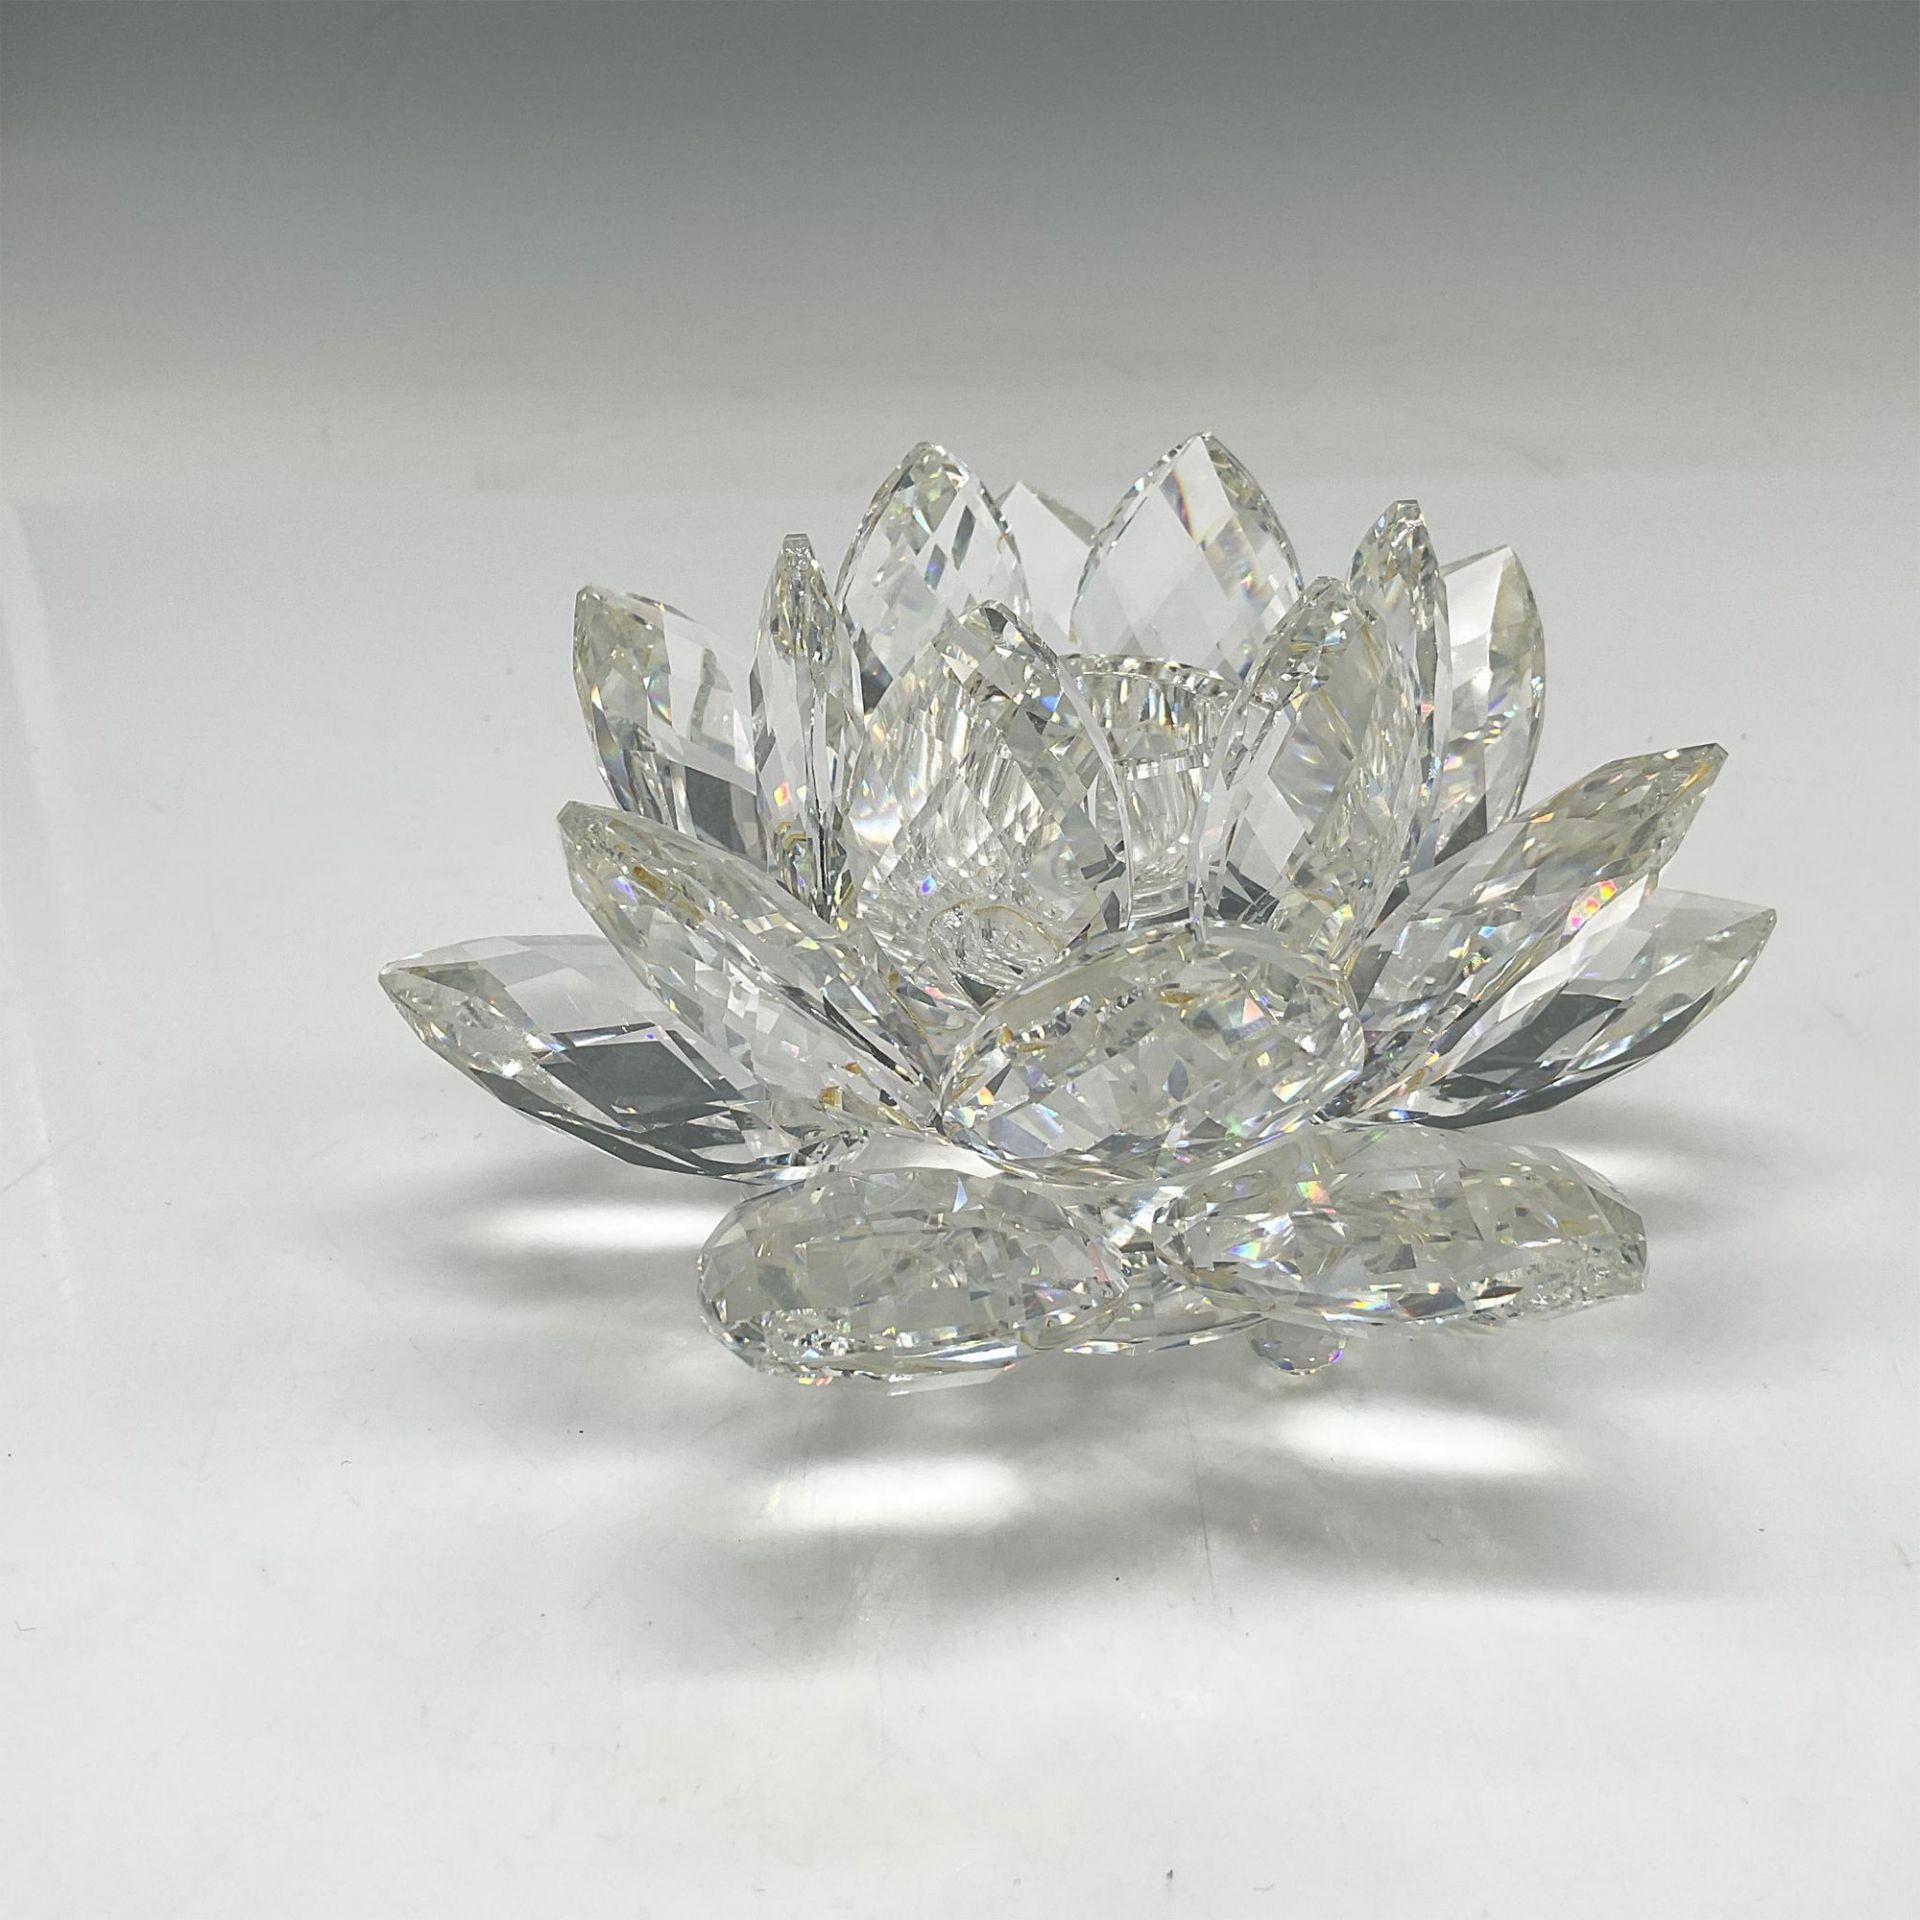 Swarovski Silver Crystal Candleholder, Large Water Lily